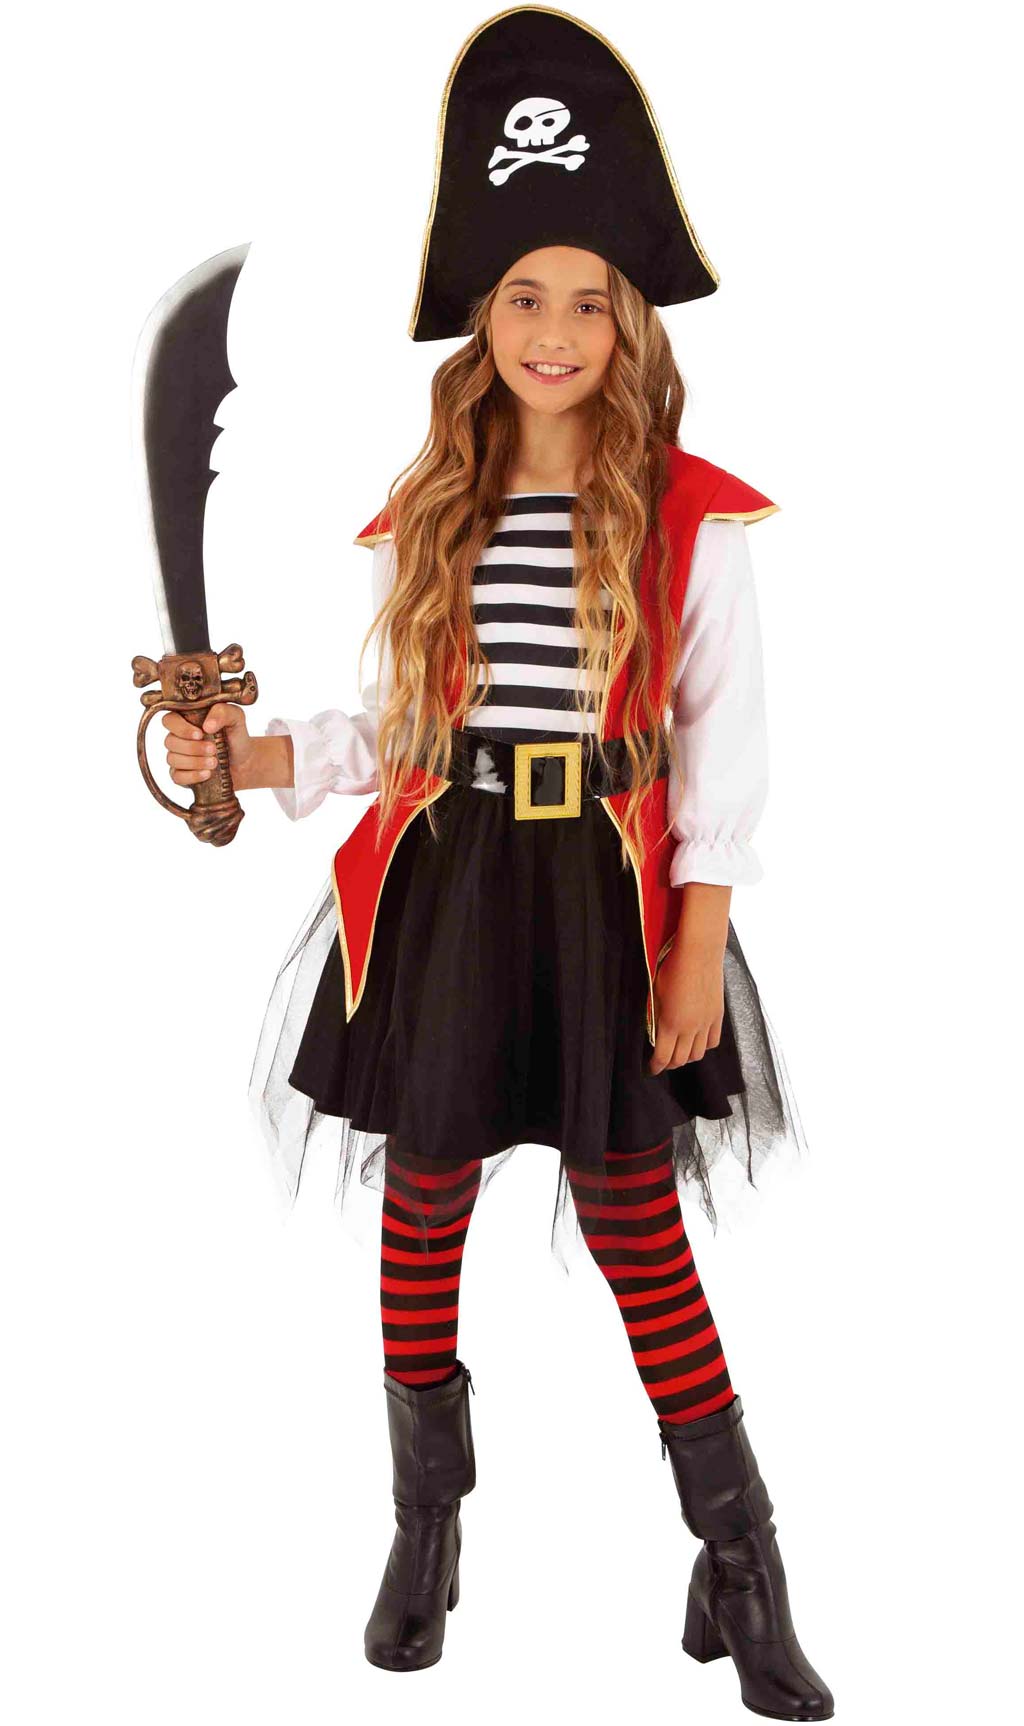 Kit Accesorios Pirata Niños Disfraz Fiesta Disfraces Halloween